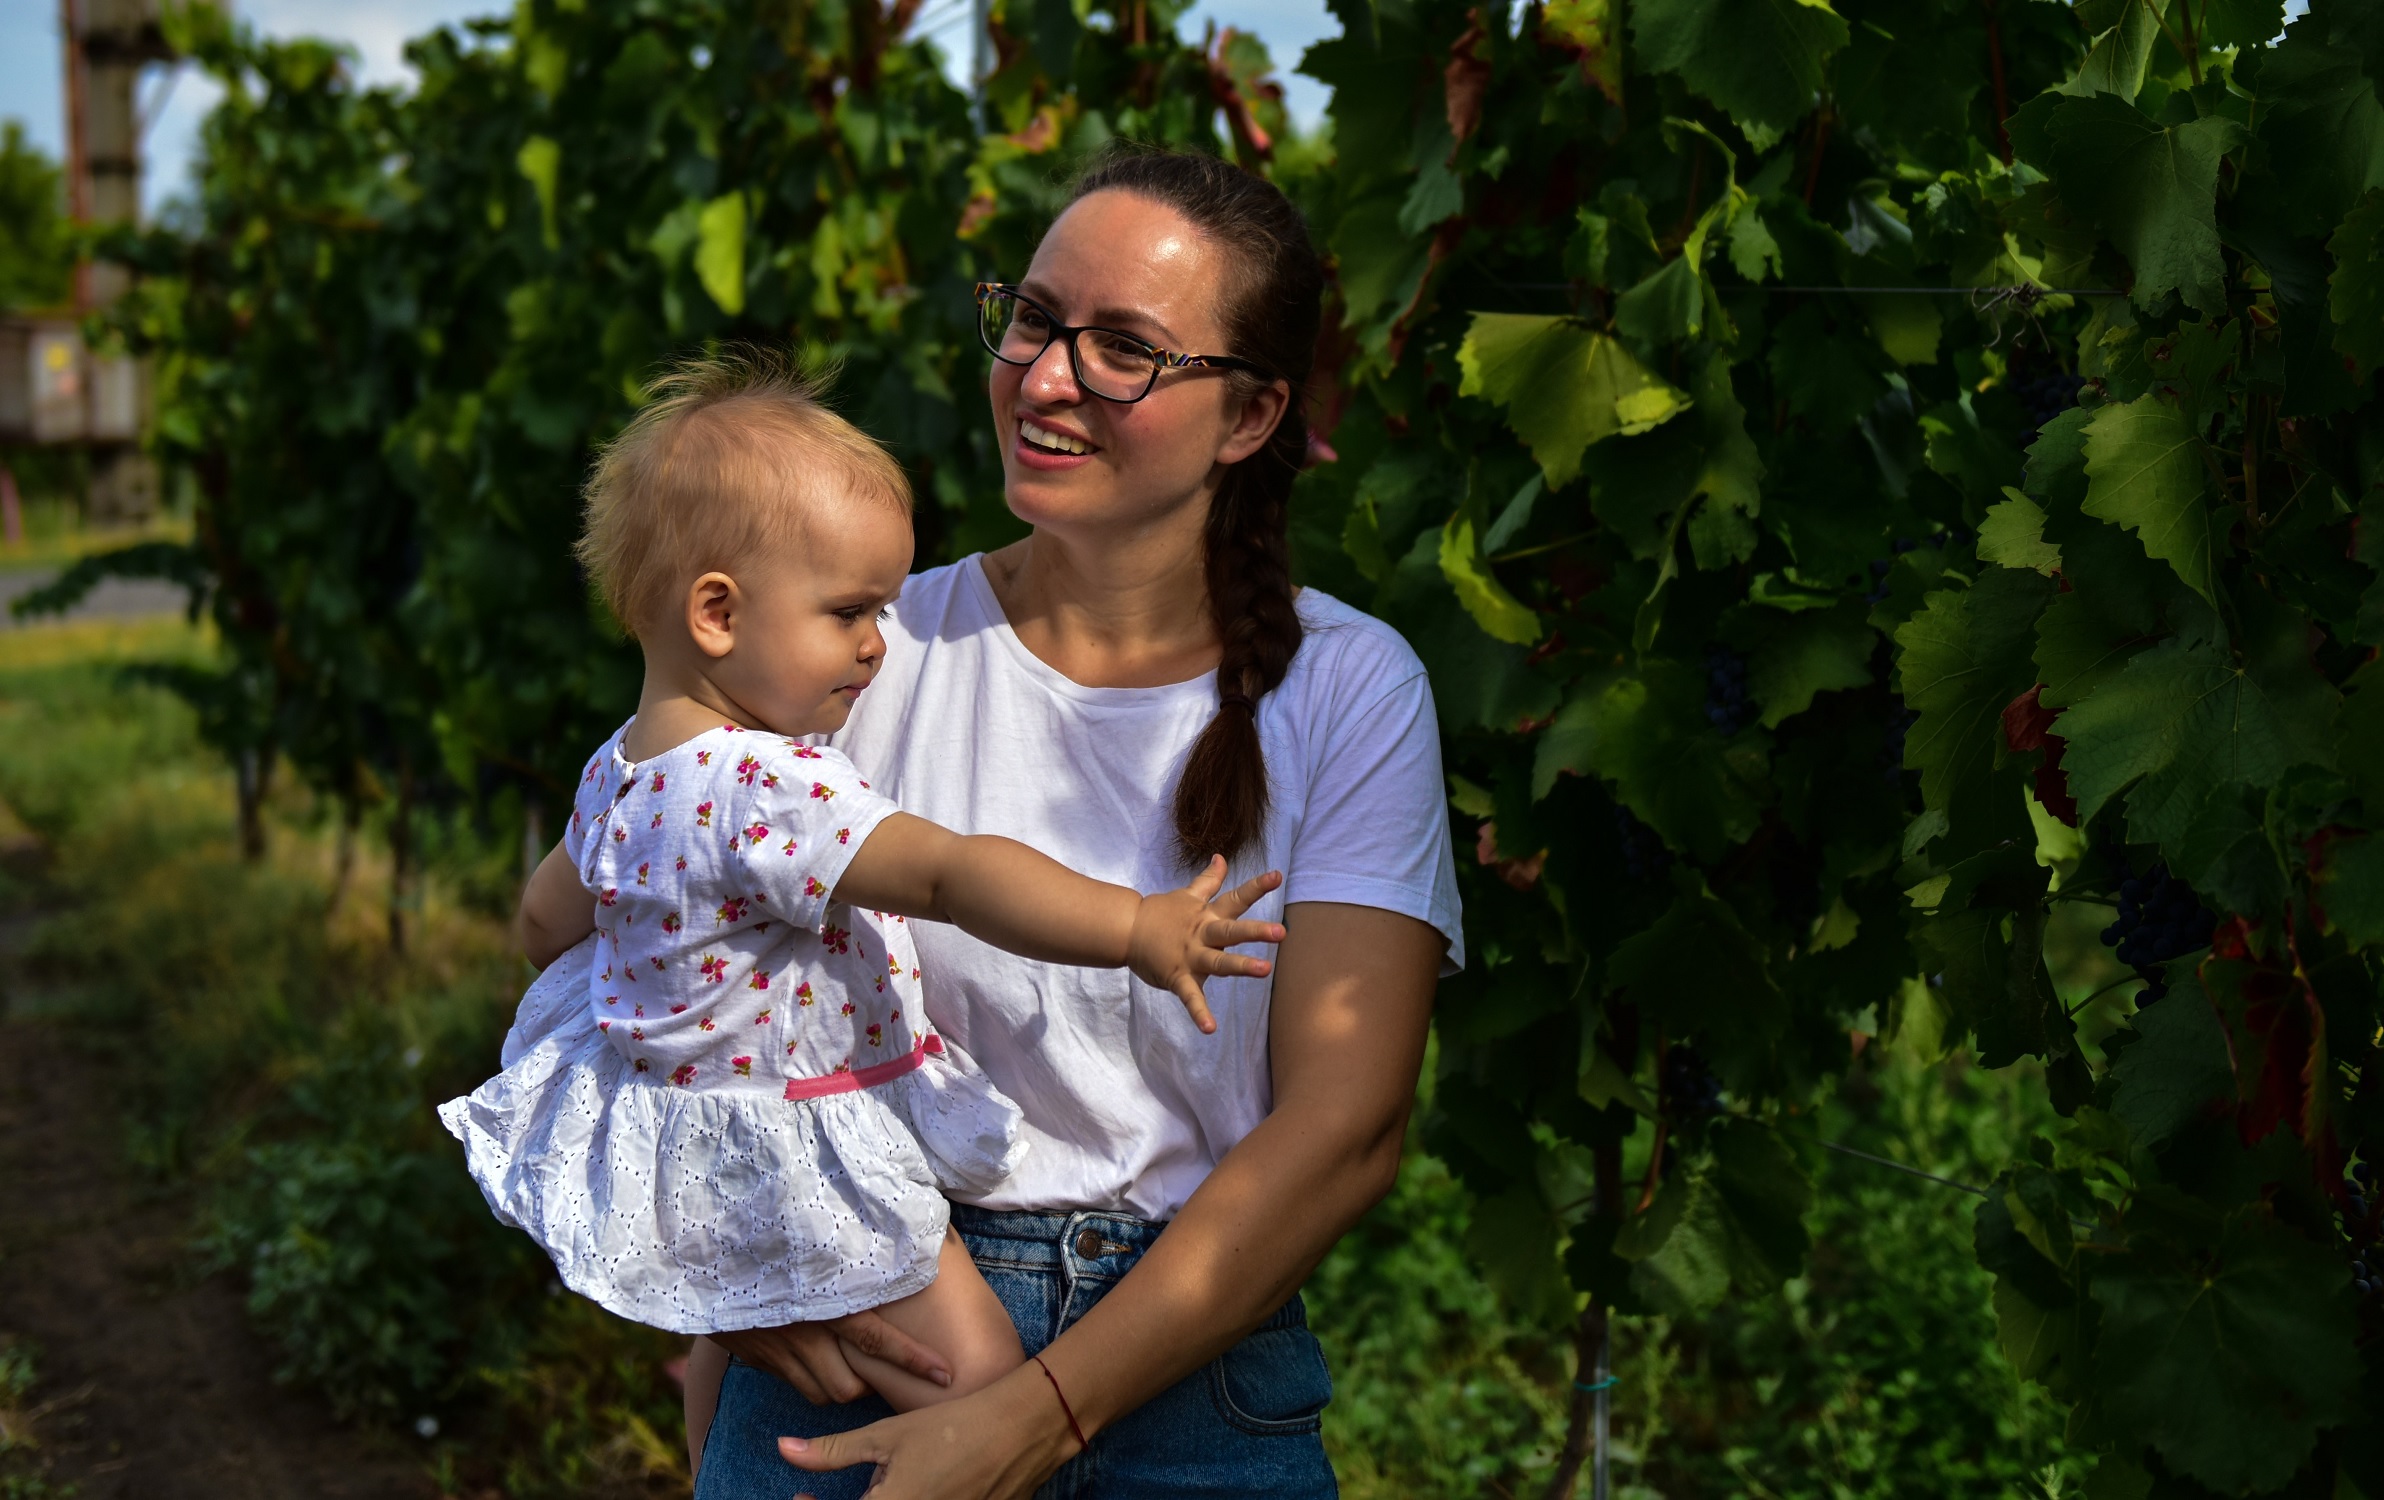 Harvest with Rózi – a visit to winemaker Anna Barta